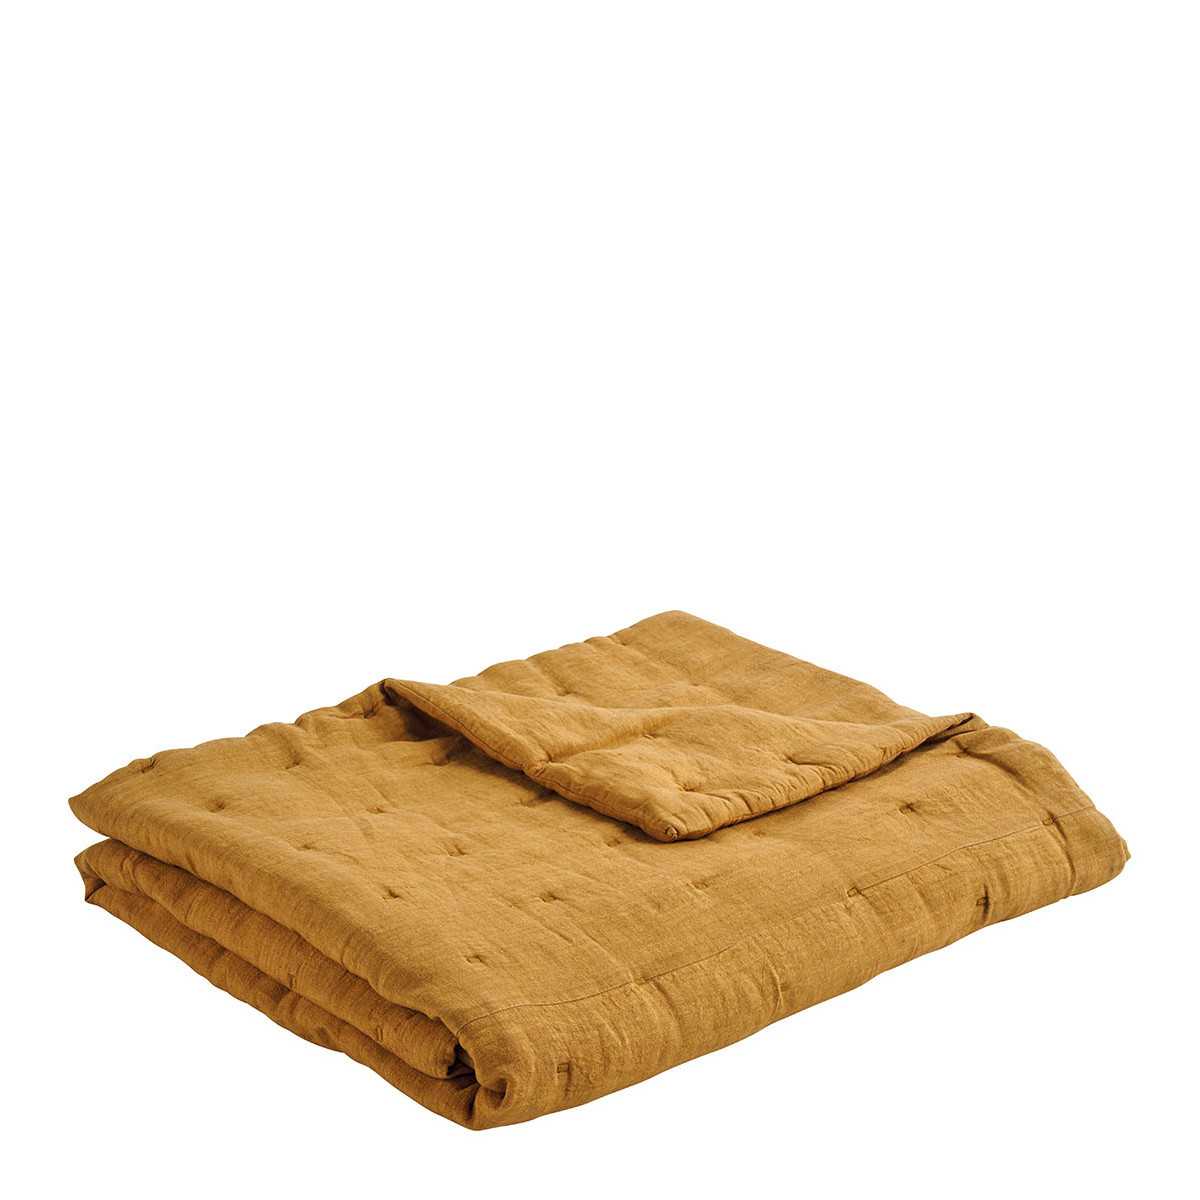 INTERIEUR- DECORATION|CHLOE bedspread in washed linen - Saffron - 230 x 180 cmBLANC D'IVOIREBedspread